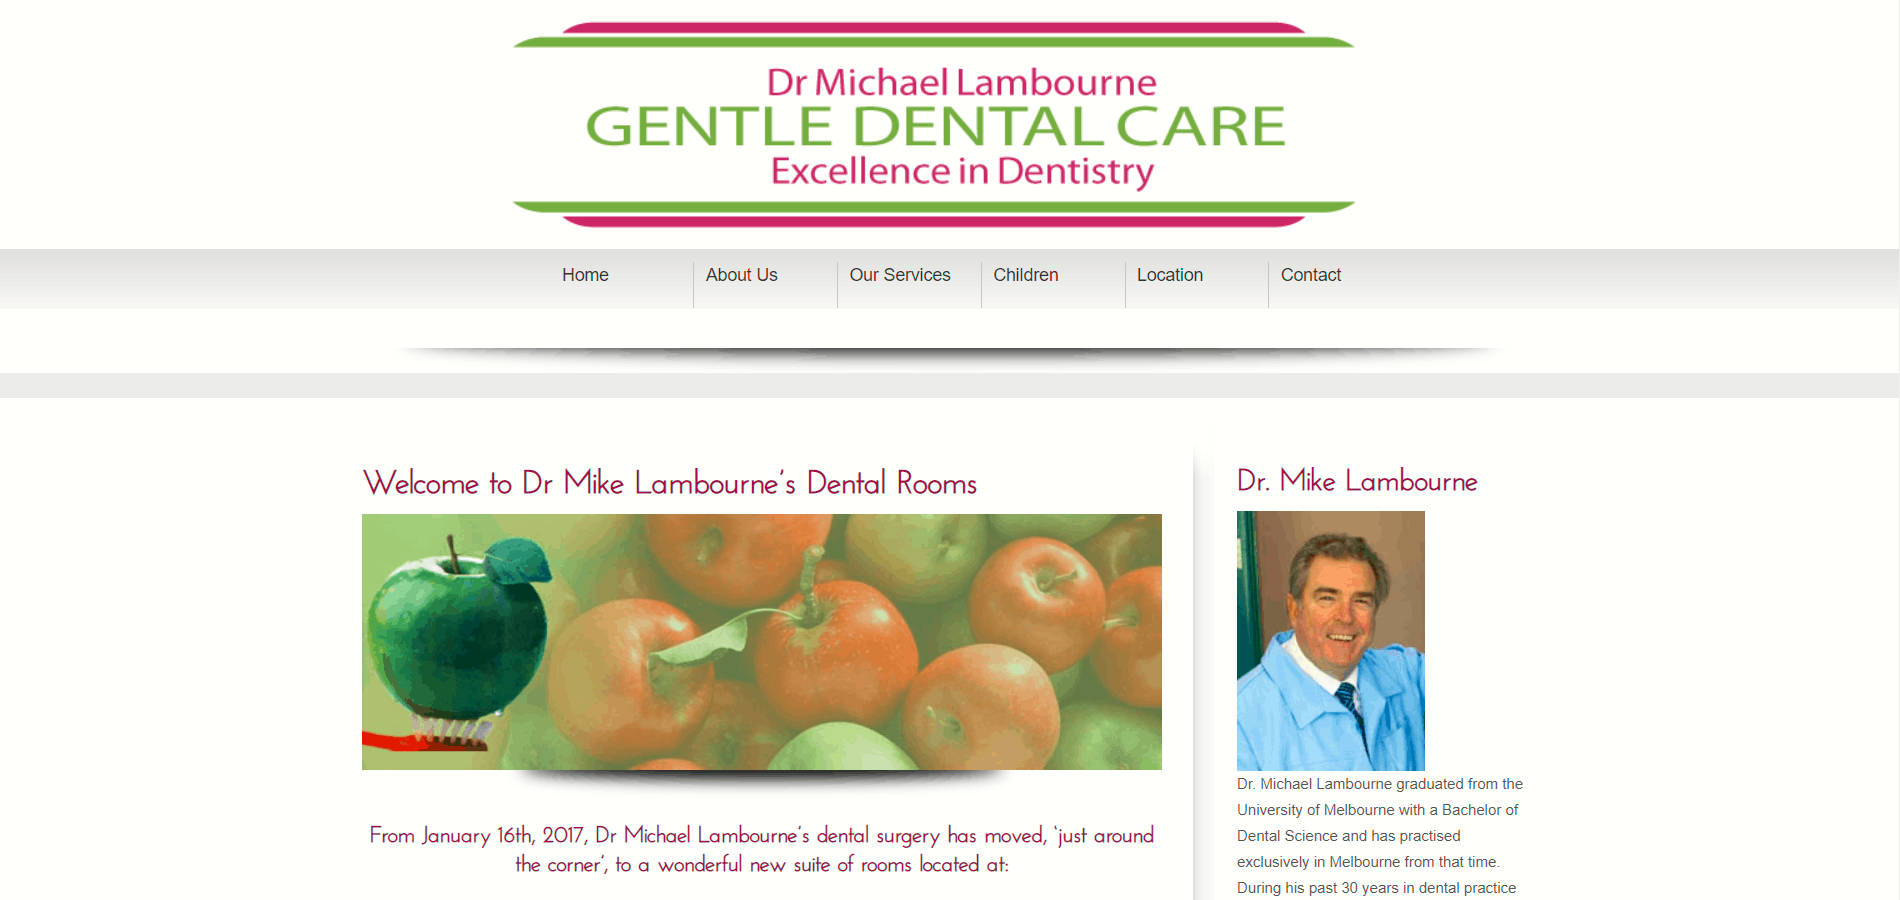 Dr Mike Lambourne’s Dental